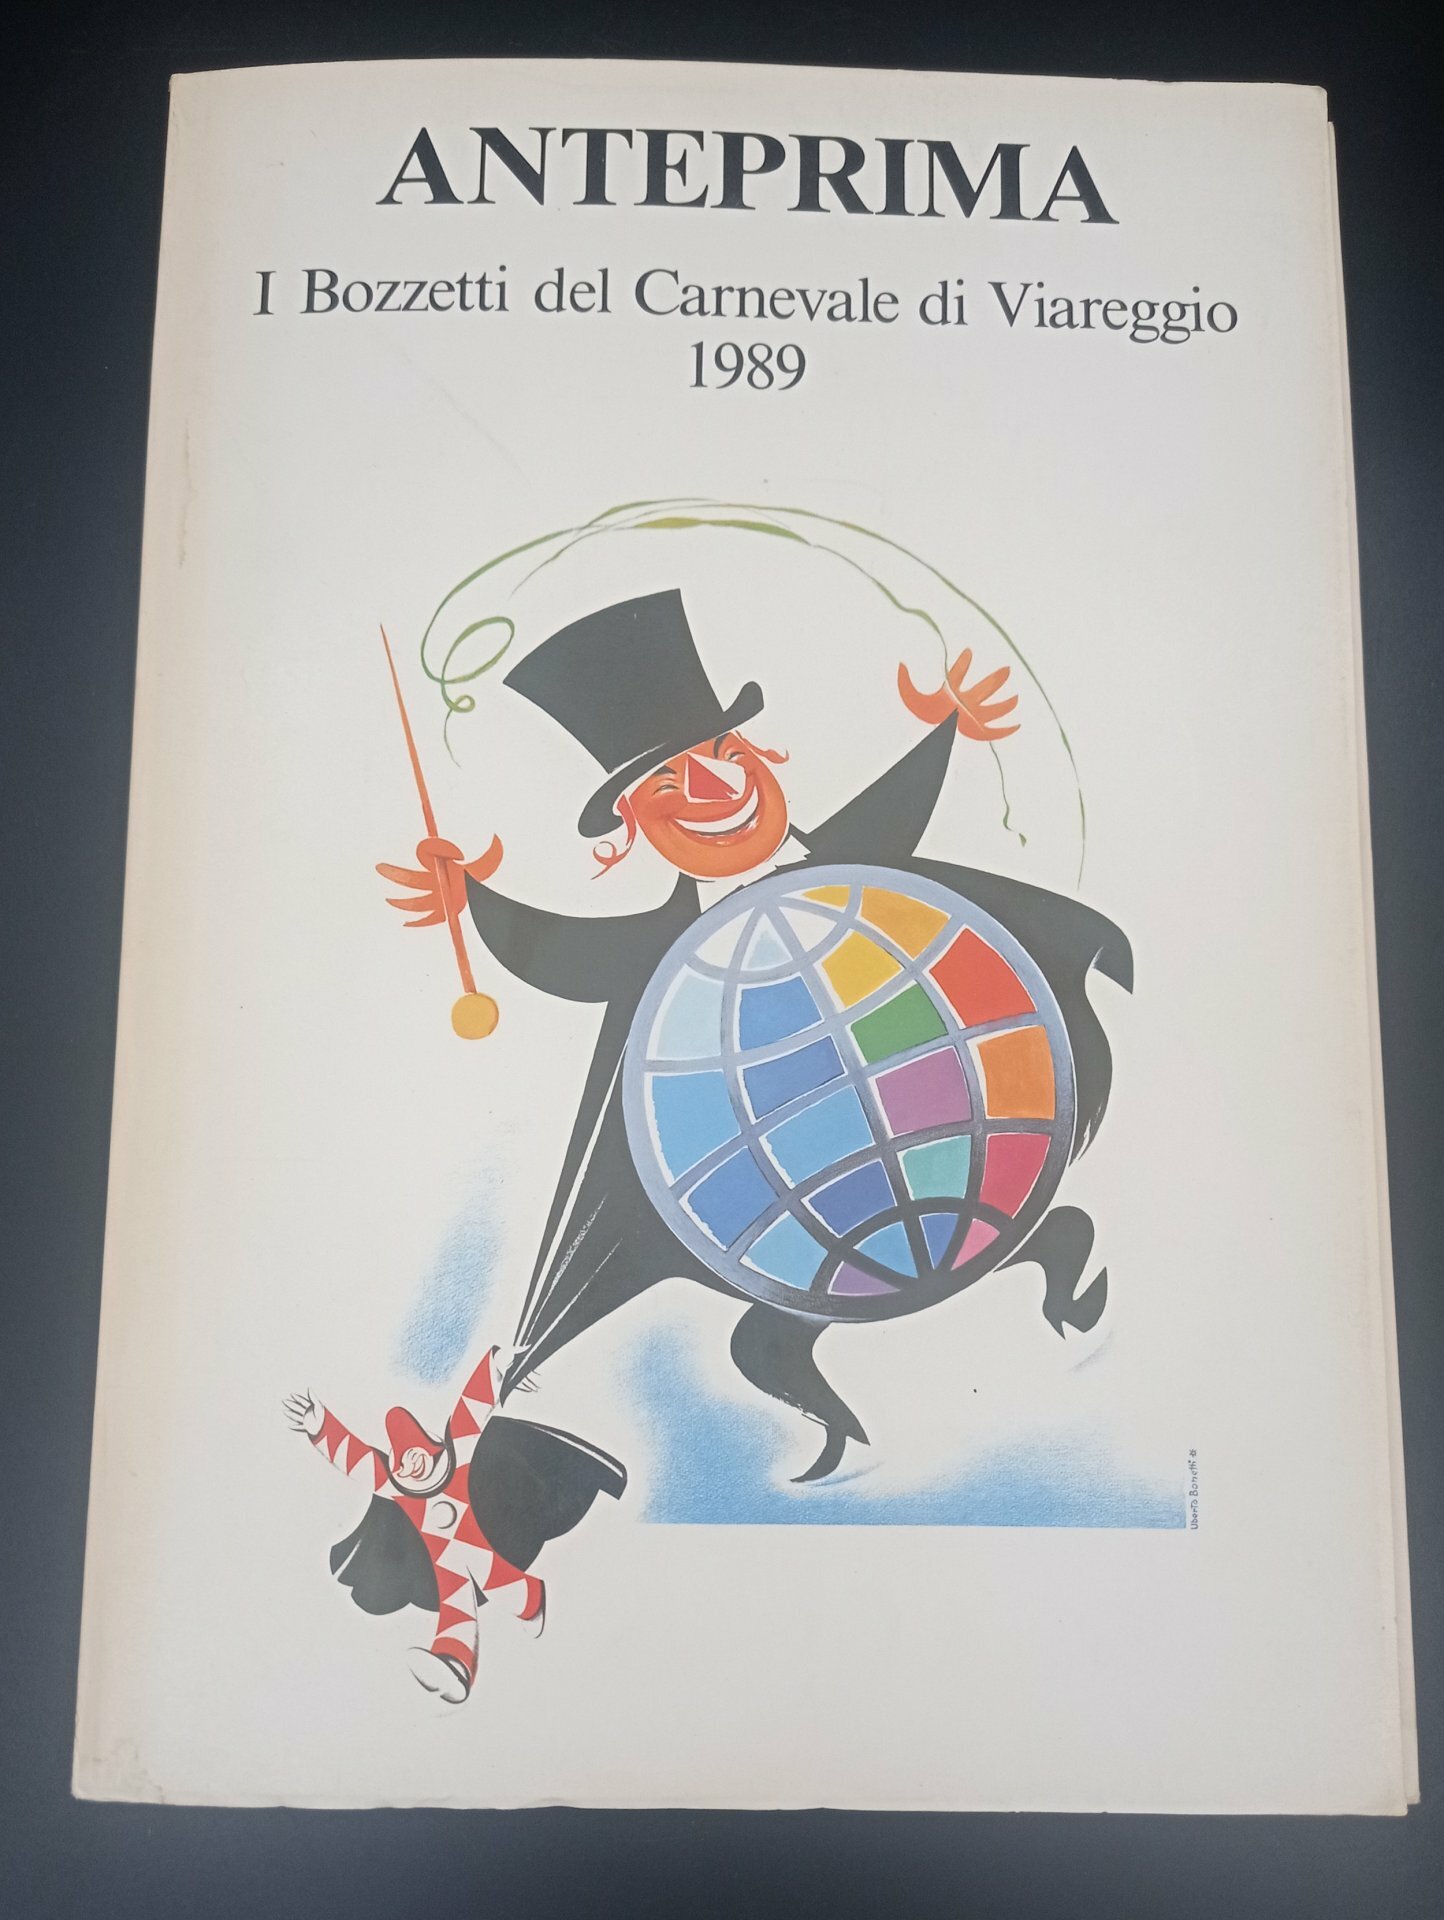 Книга с репродукциями "Anteprima. I Bozzetti del Carnevale di Viareggio 1989" (Премьера. Эскизы карнавала в Виареджо 1989)